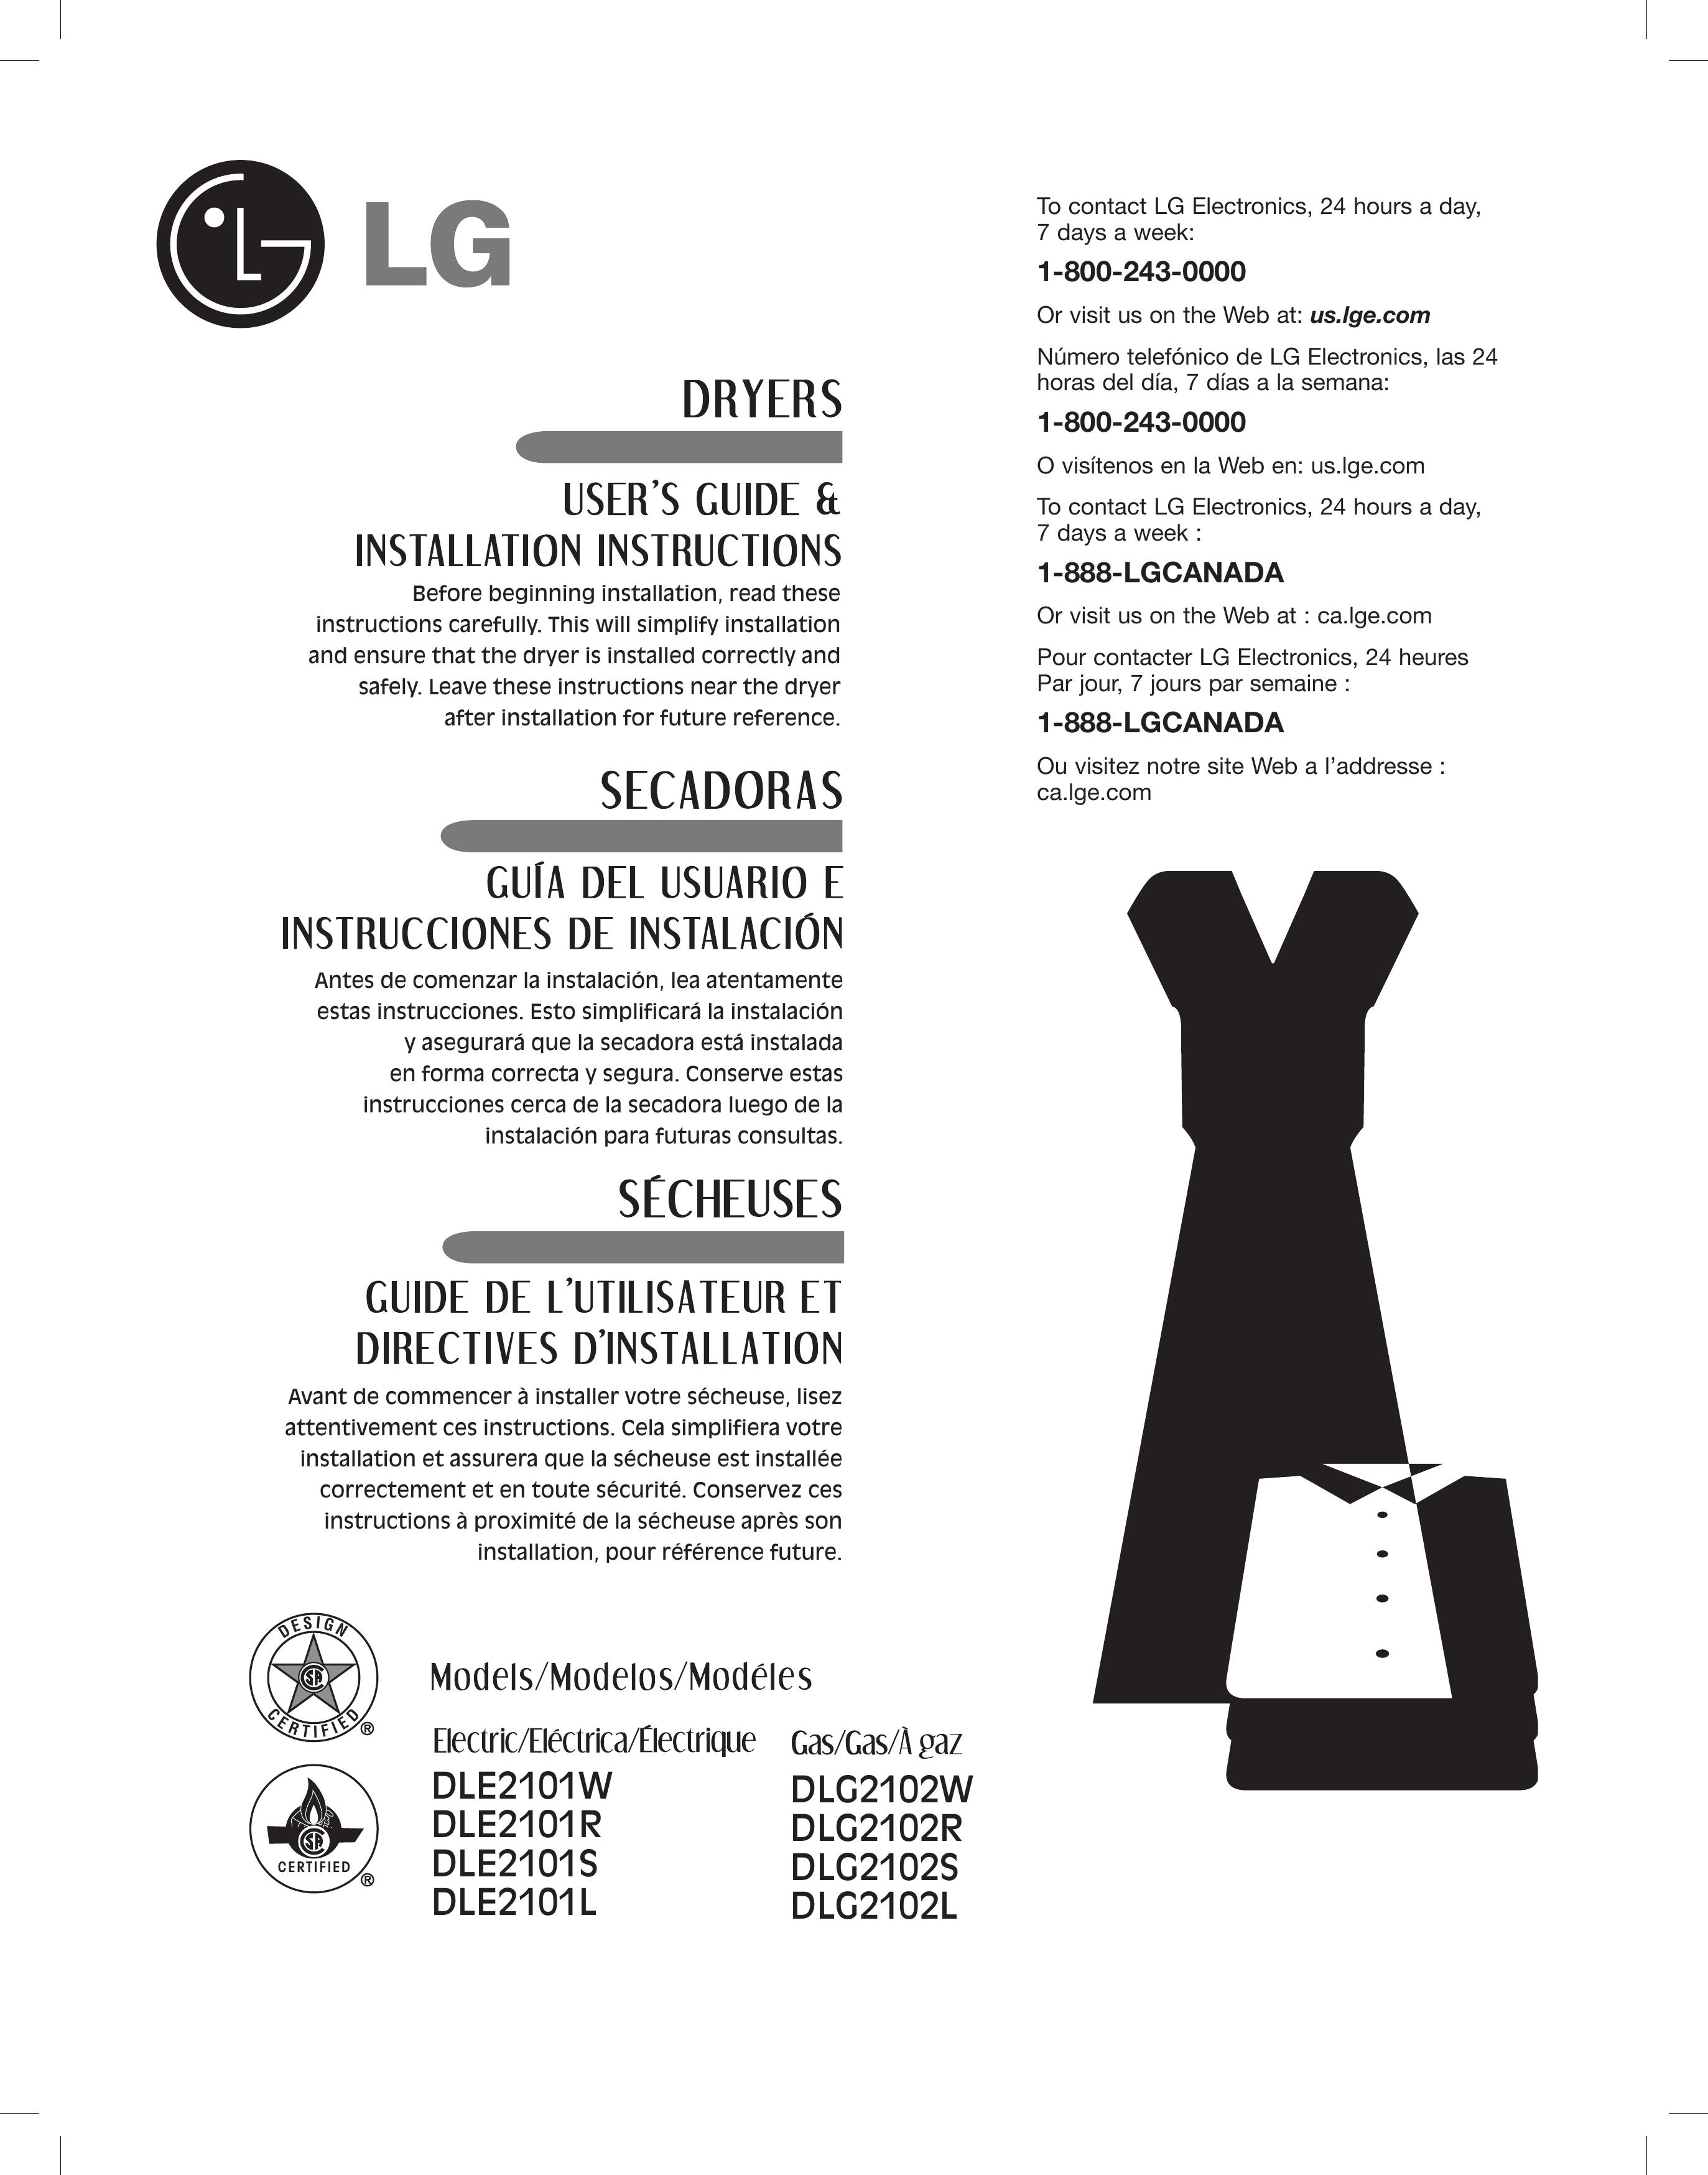 LG Electronics D2102L Clothes Dryer User Manual